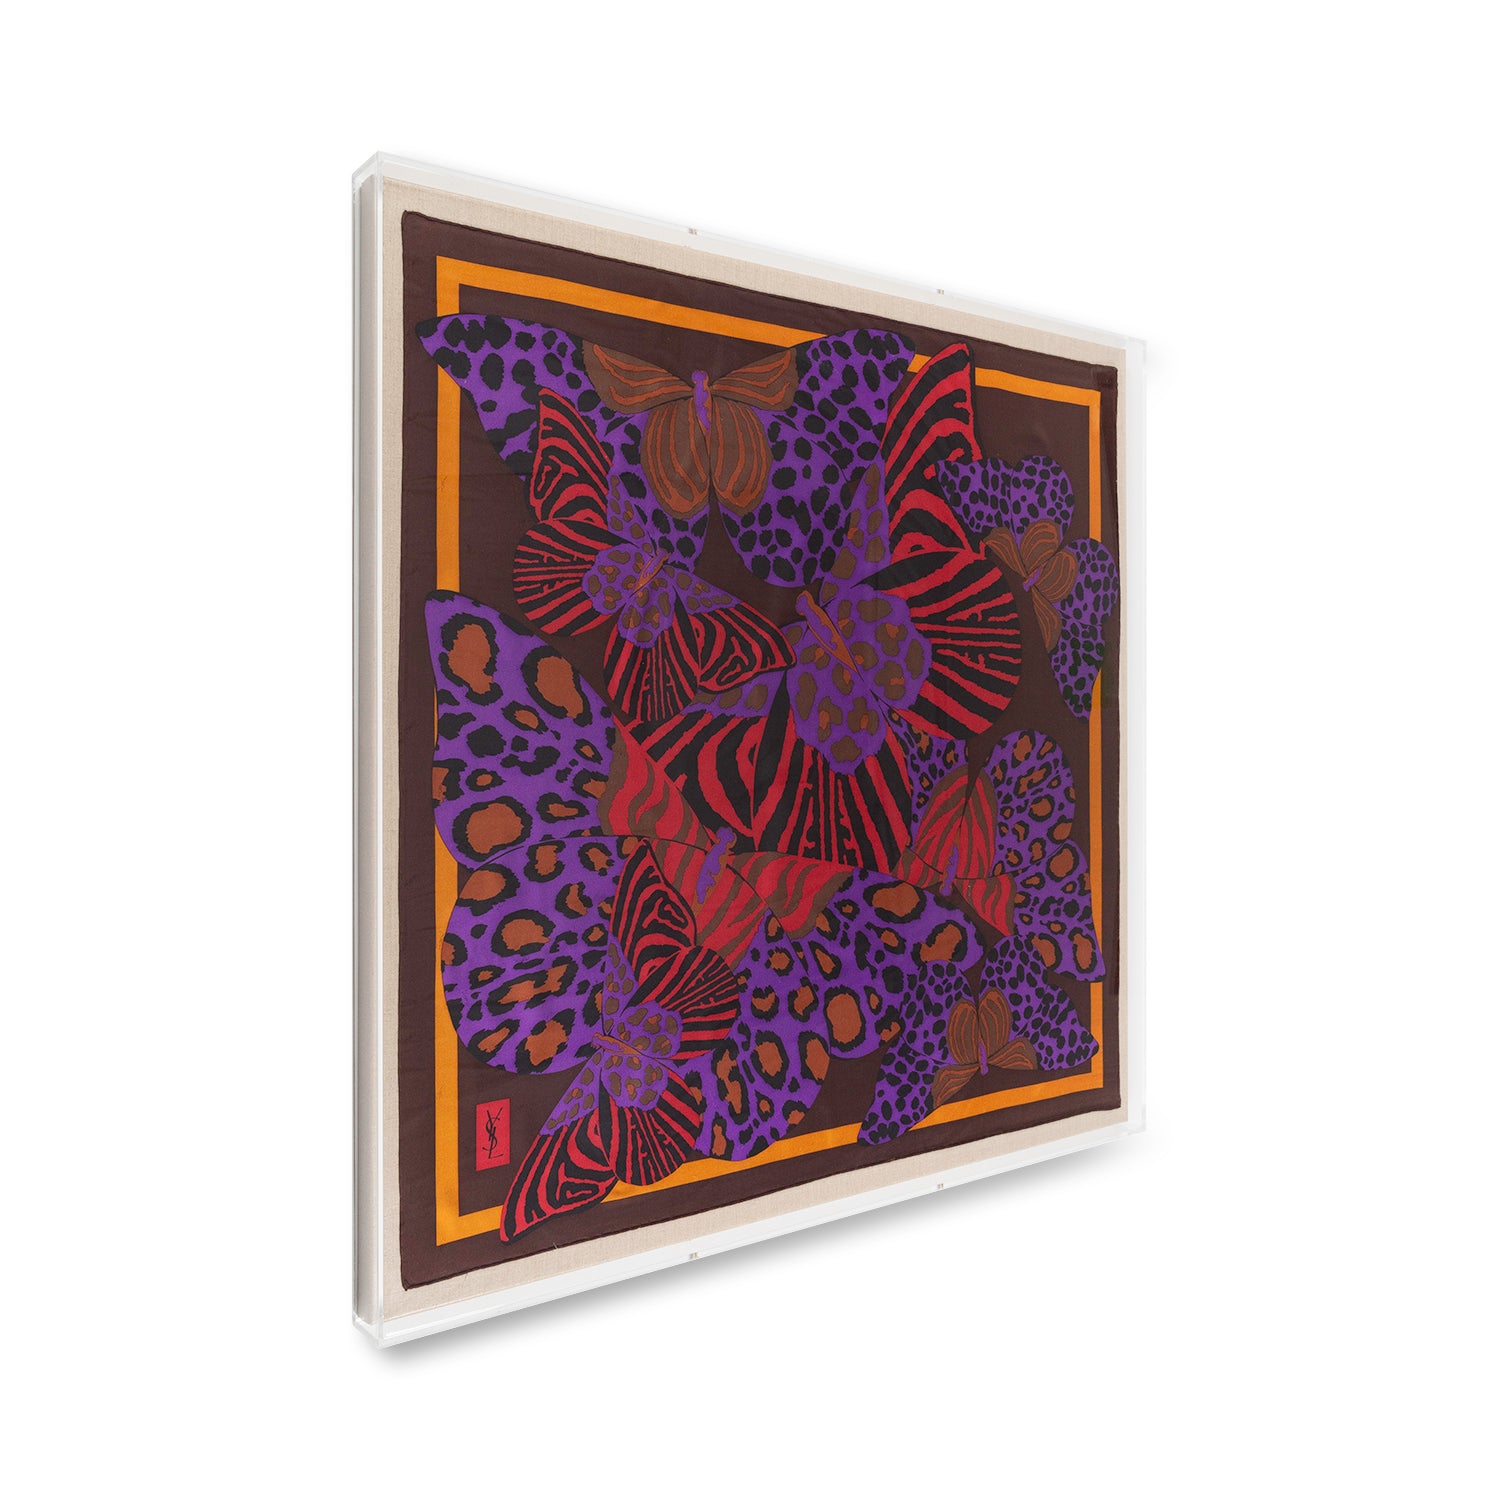 Framed Yves Saint Laurent Butterflies on Brown Silk Scarf in a 36x36x2